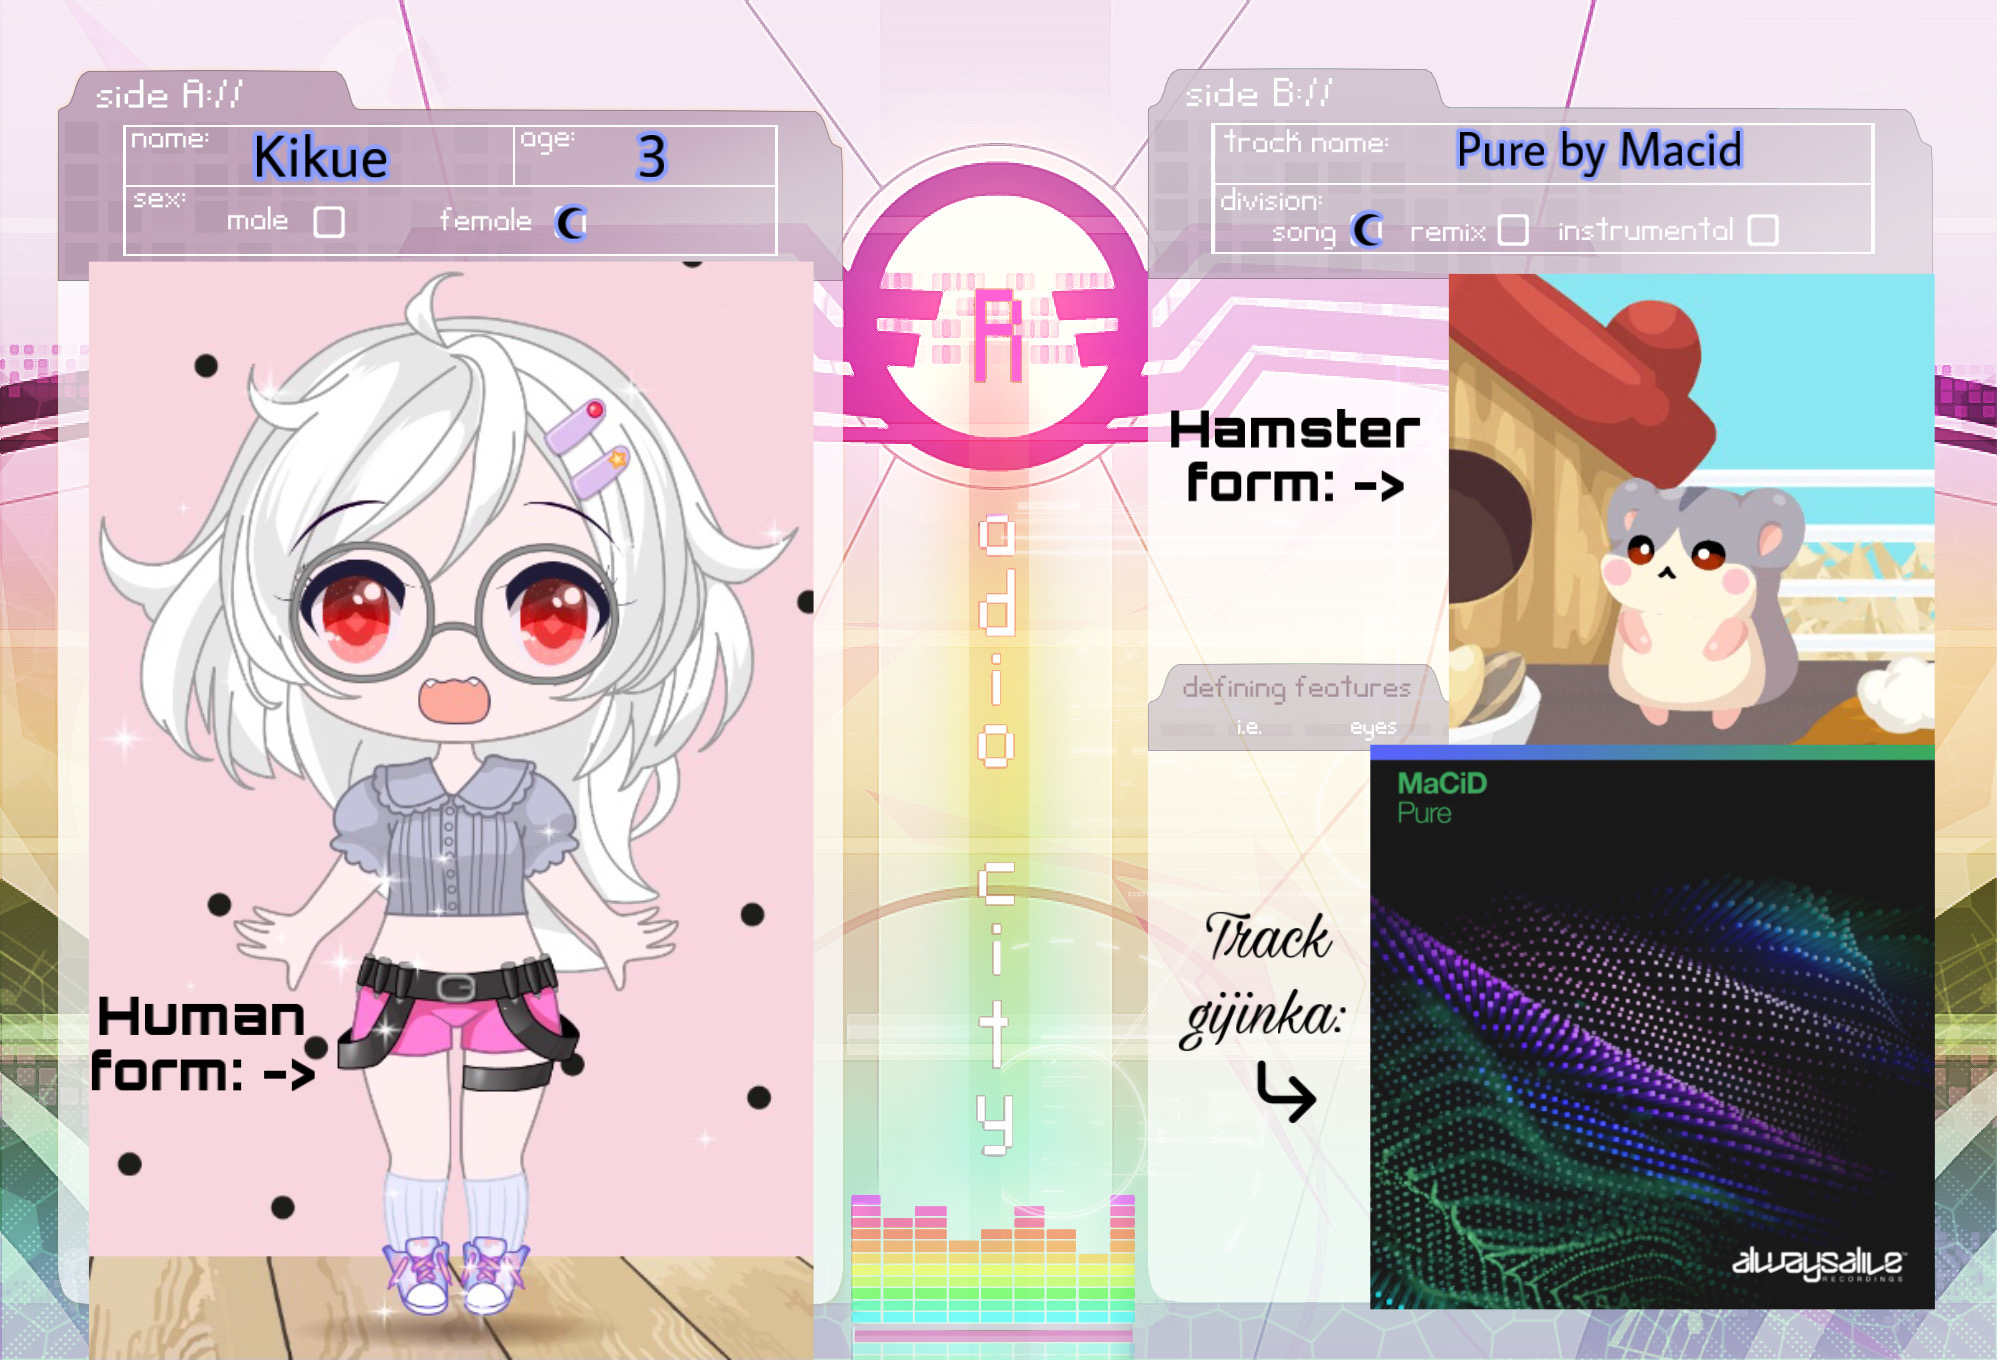 Radio City App] - Tsunehisa The Hamster by FemBoy-RealGirl on DeviantArt